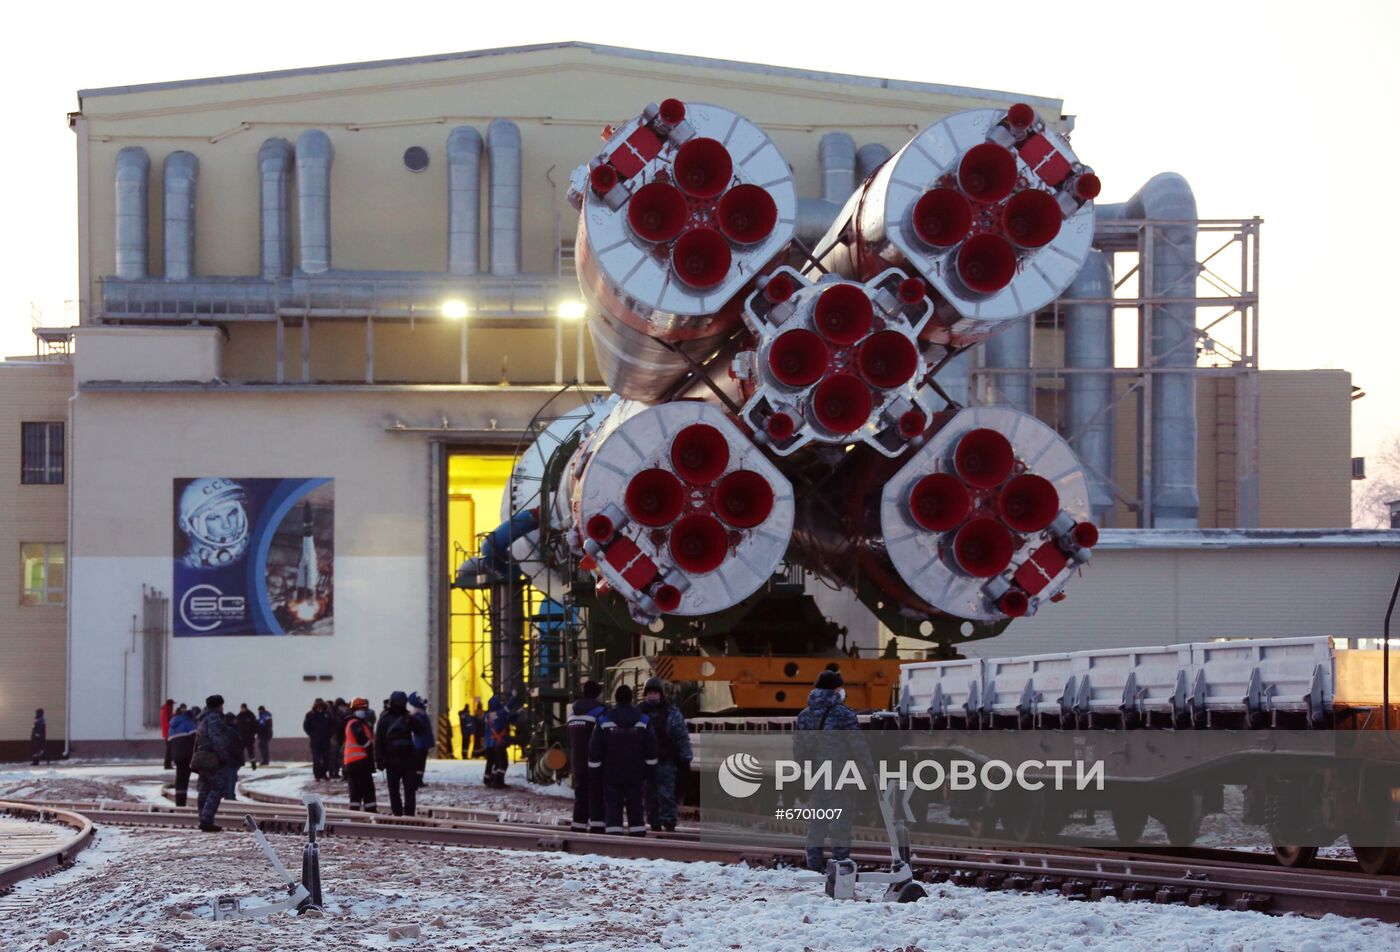 РН "Союз-2.1б" с транспортным кораблем-модулем "Прогресс М-УМ" установили на стартовом комплексе космодрома Байконур